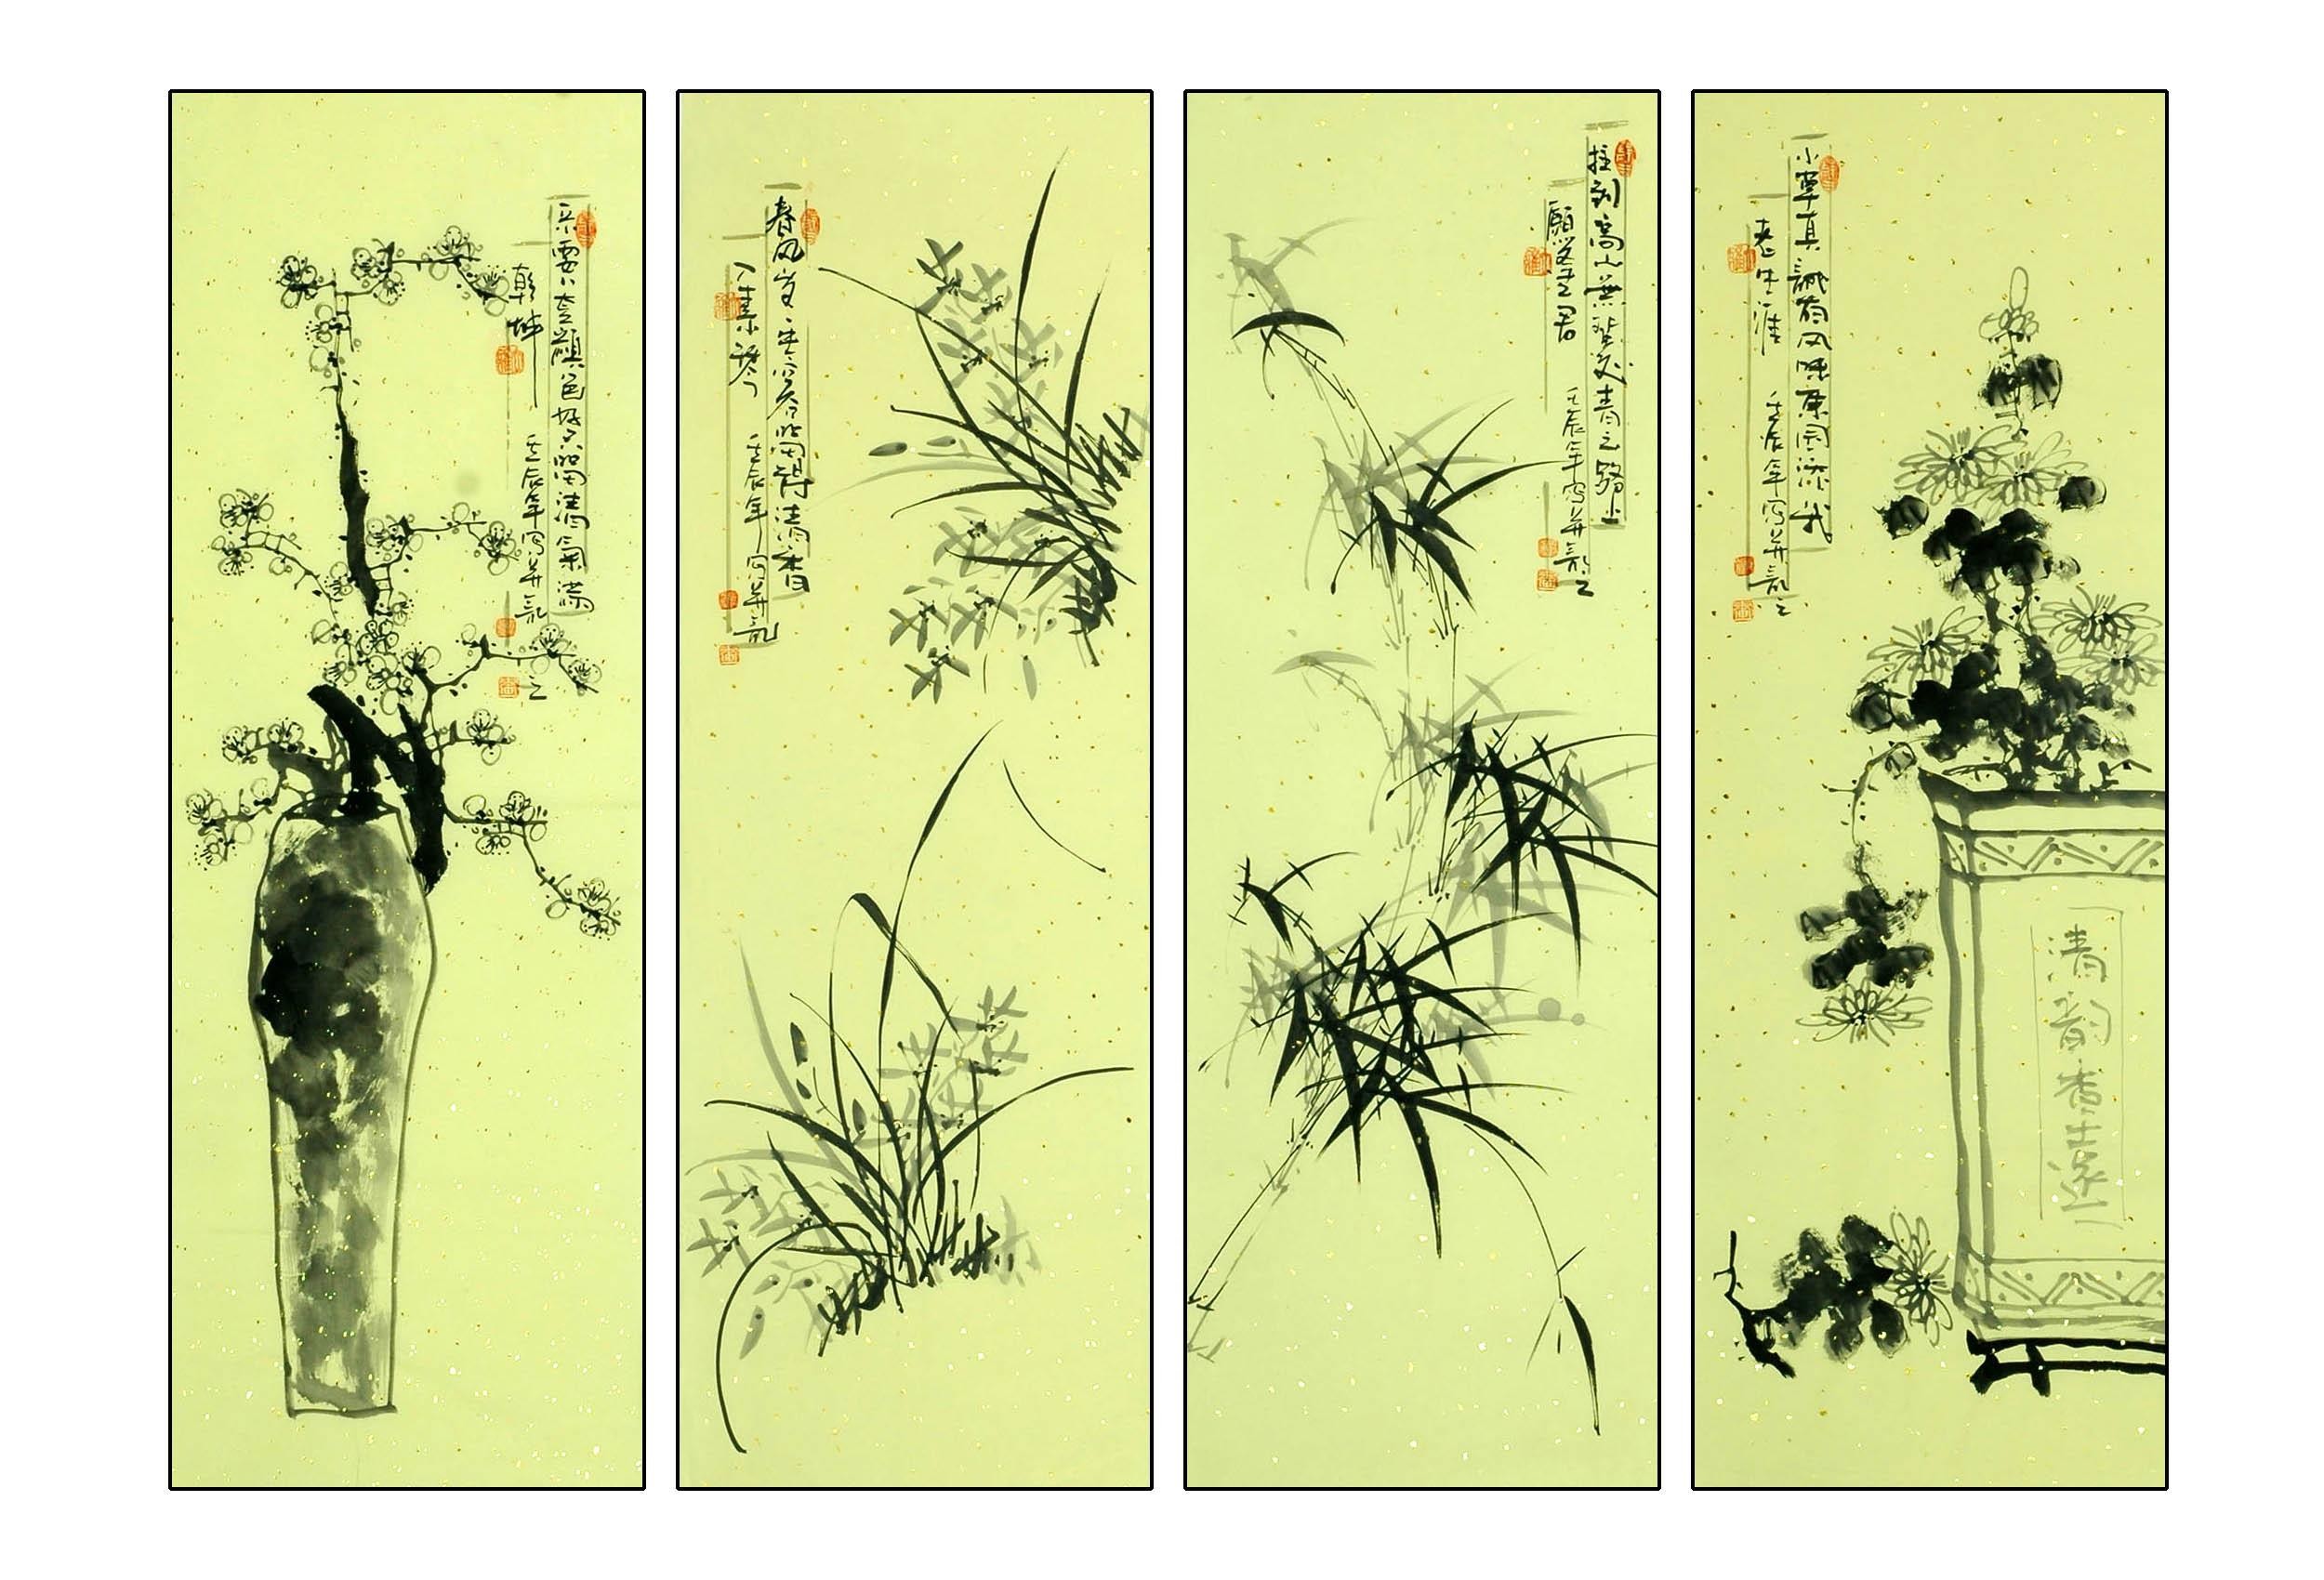 Chinese Bamboo Painting - CNAG009999